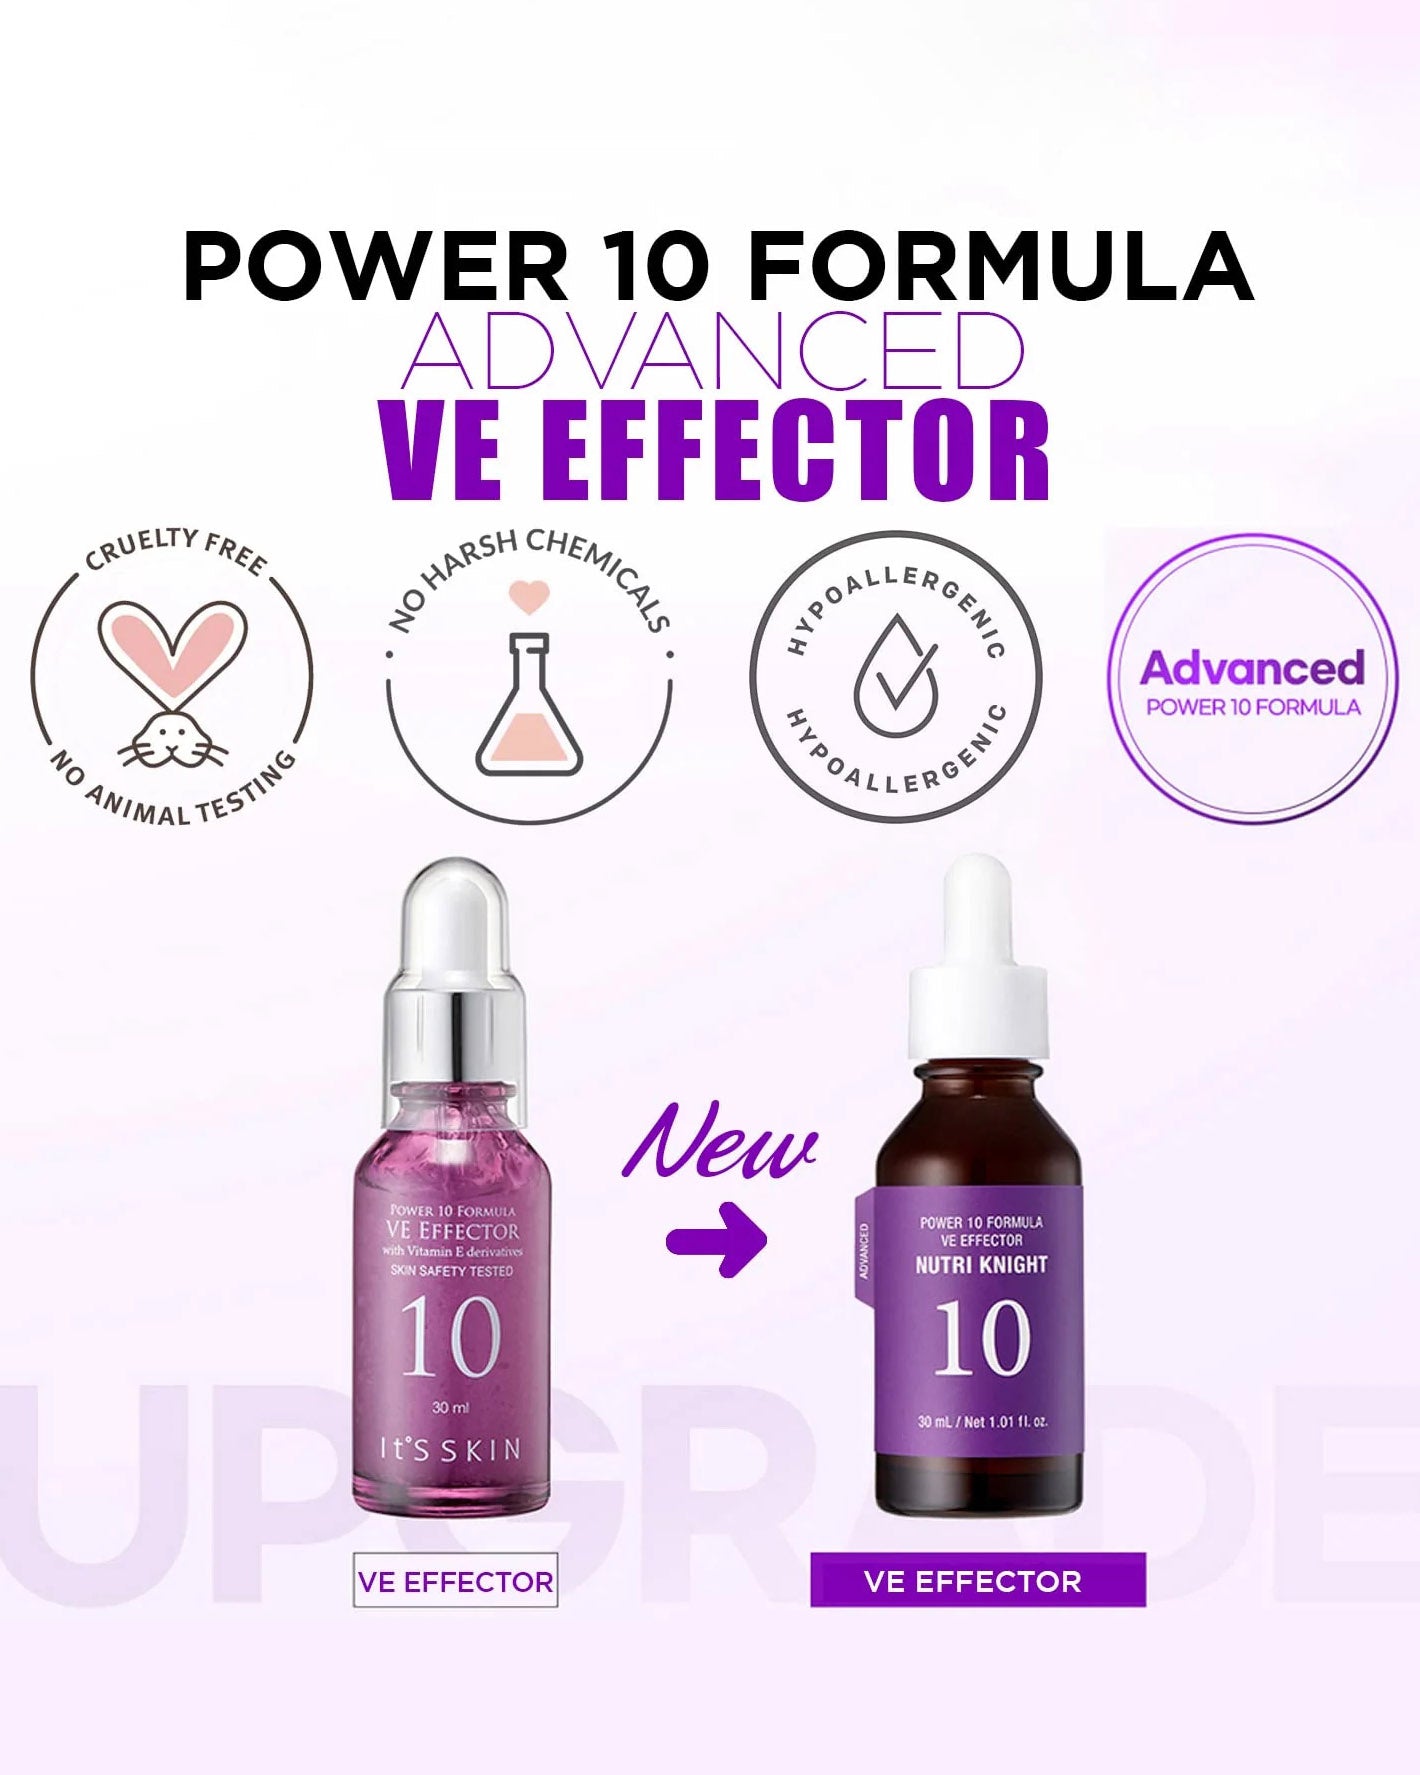 It's Skin Power 10 Formula VE Effector AD Nutri Knight